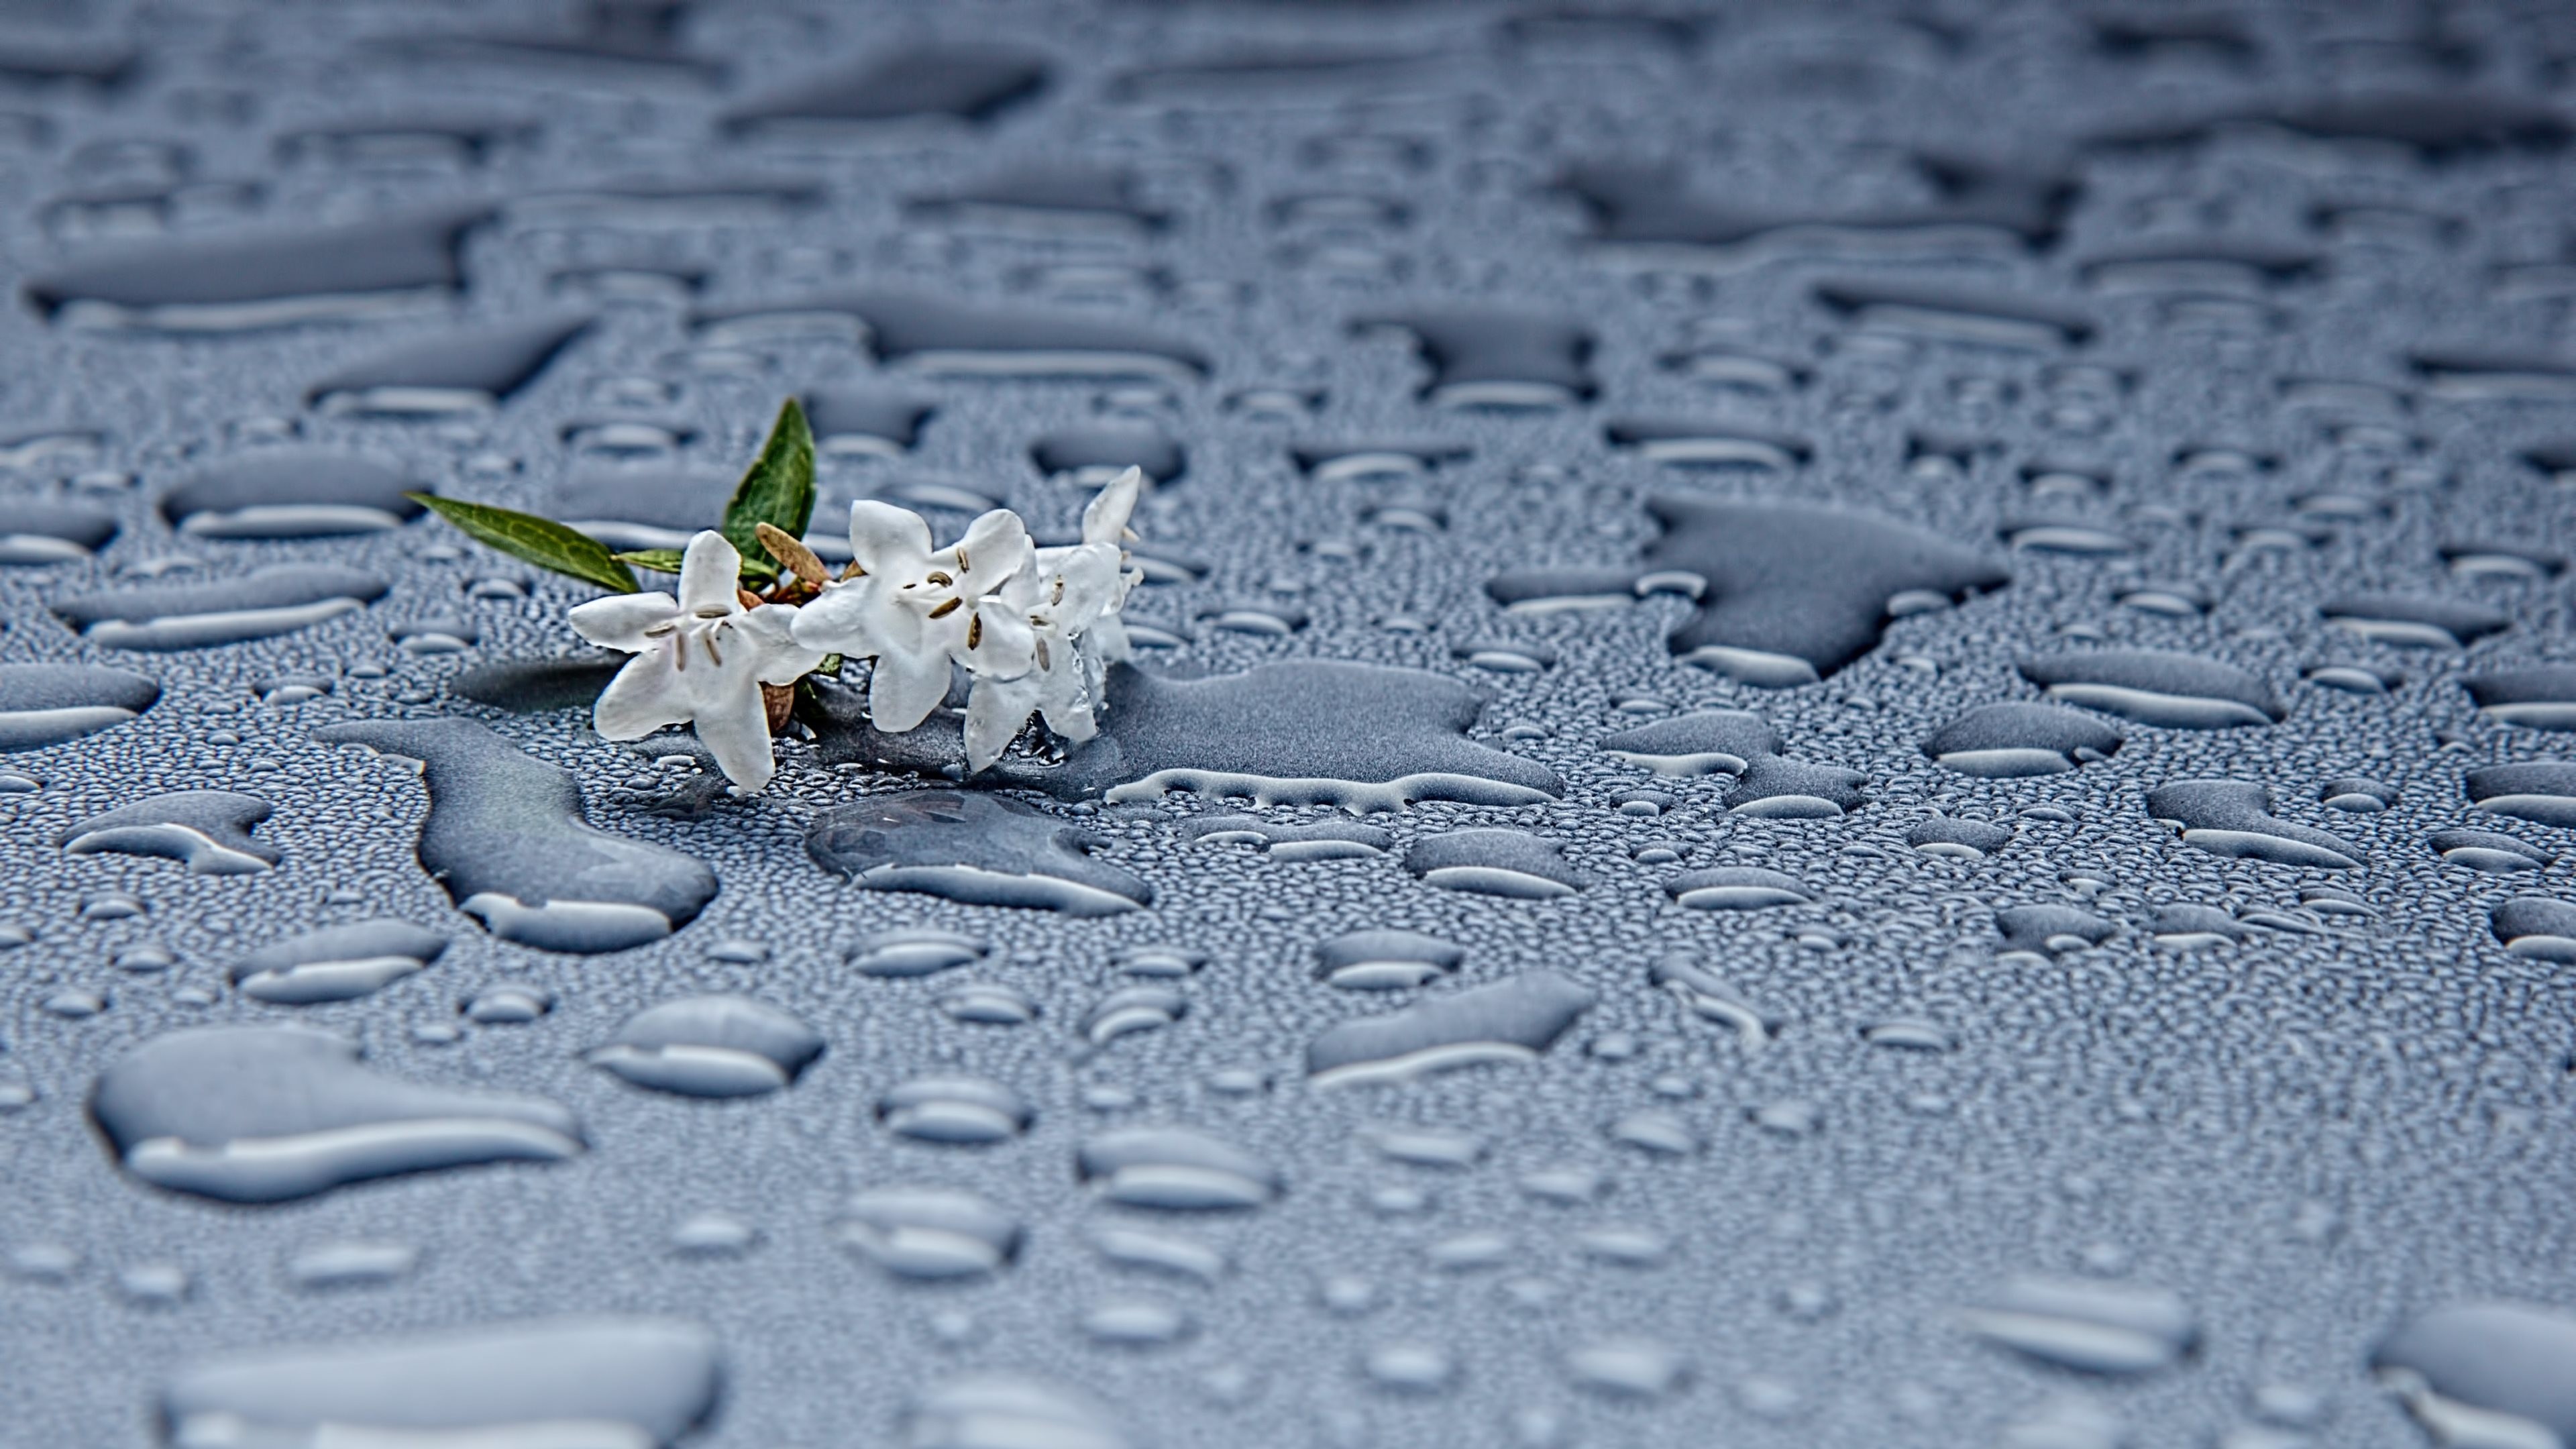 3840x2160 Wallpaper: Rain drops and white flowers